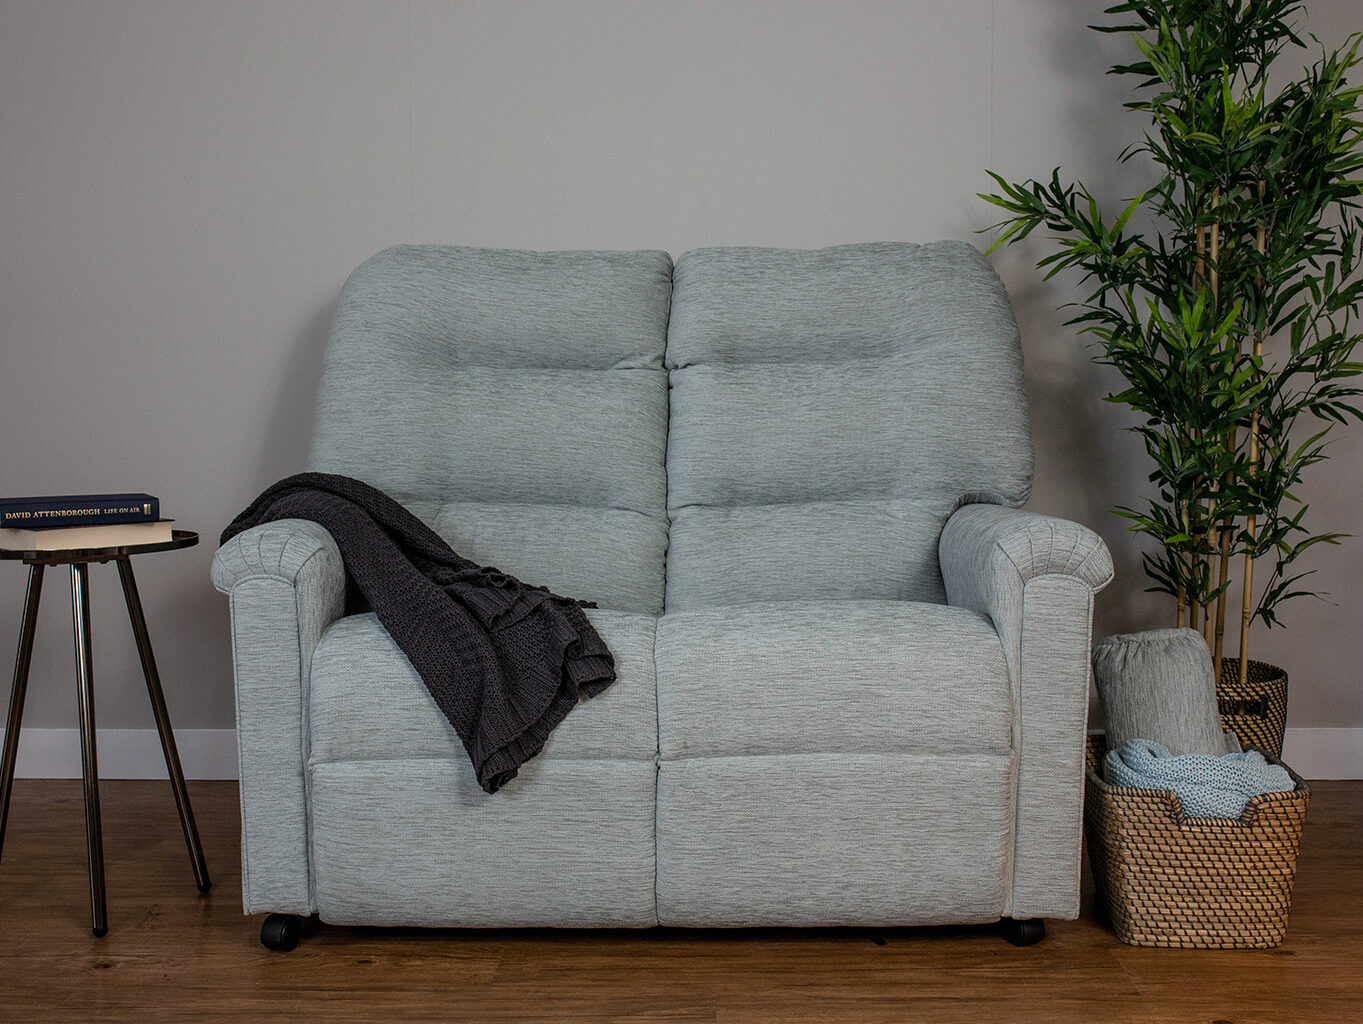 Light grey Blenheim sofa in a sitting room setting.